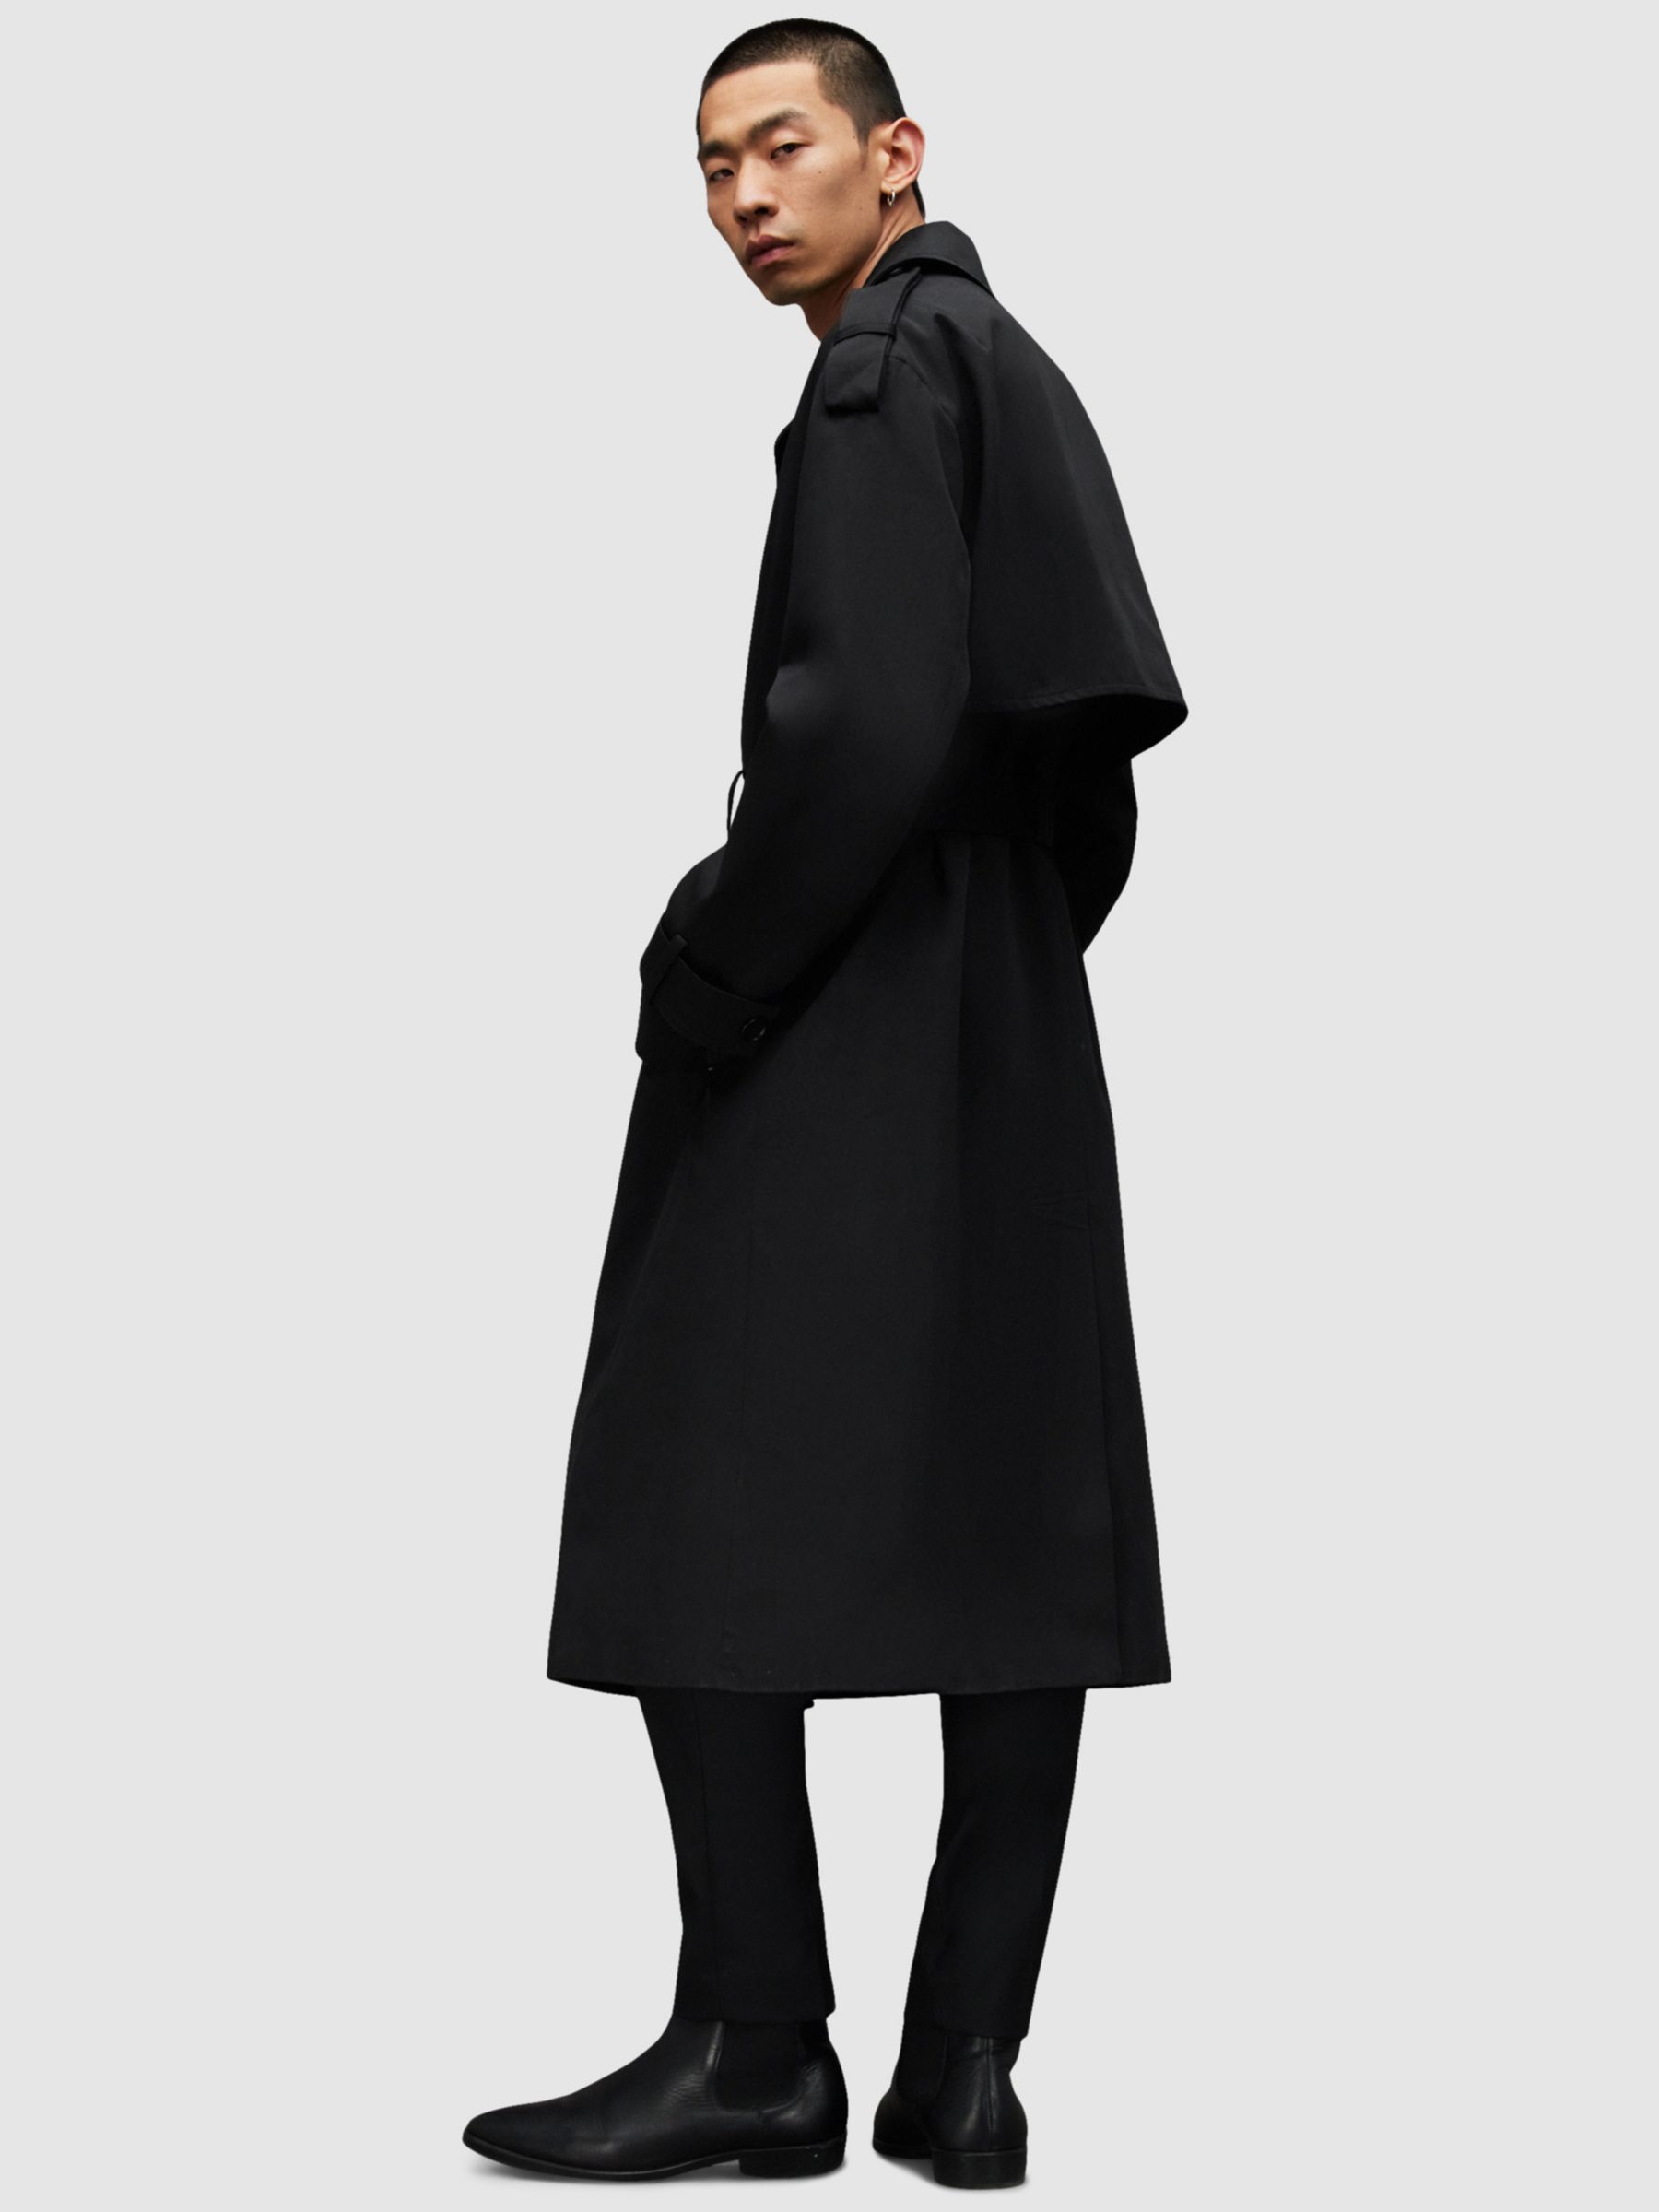 AllSaints Spencer Trench Coat, Black at John Lewis & Partners